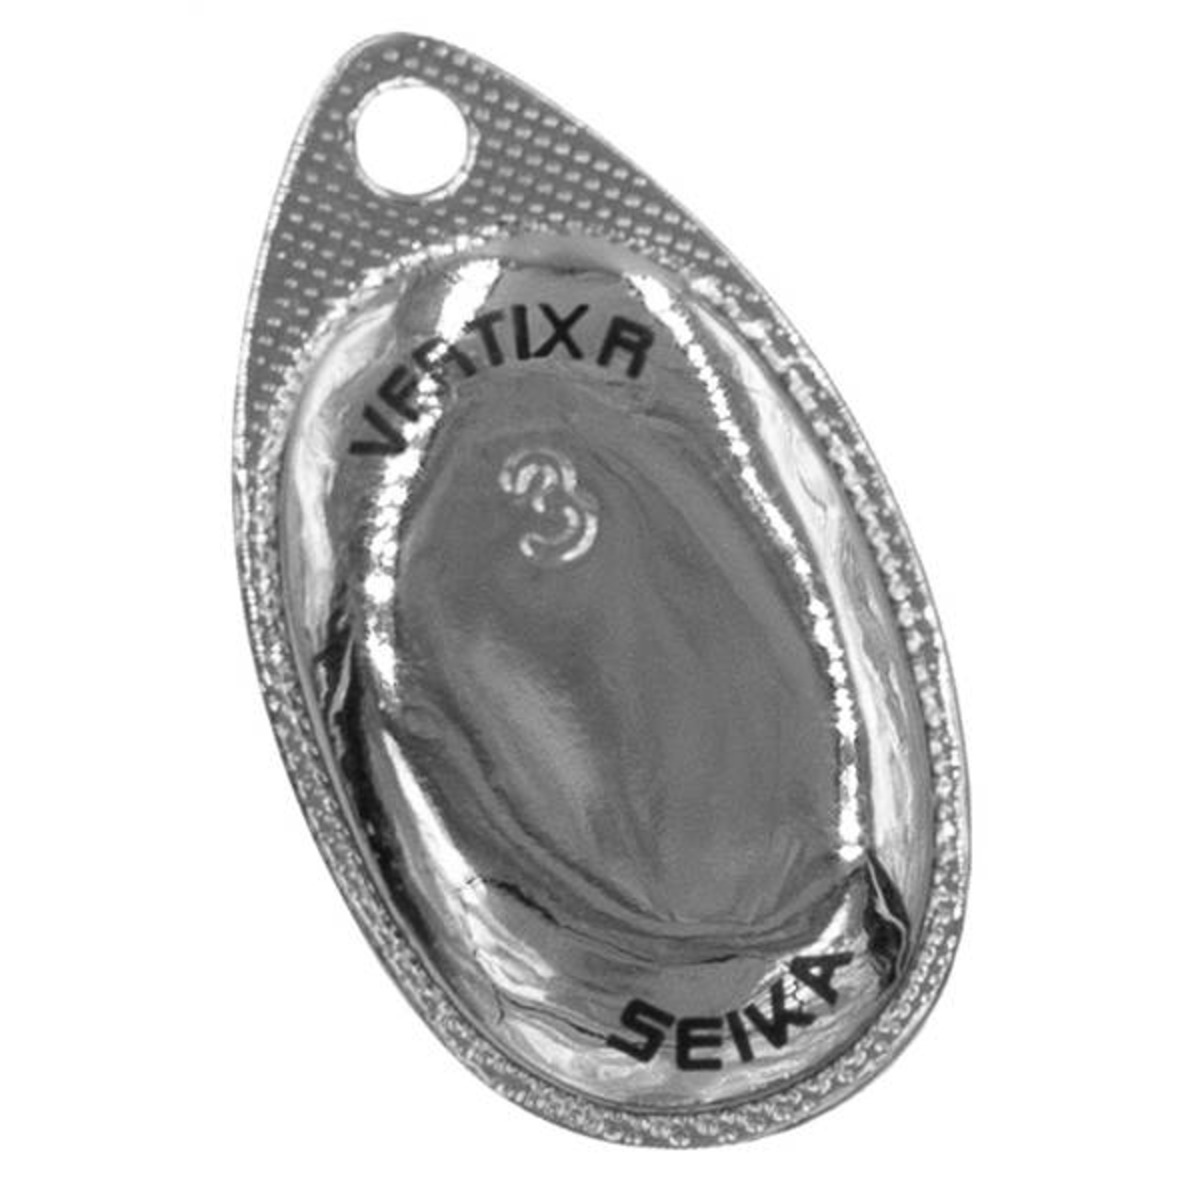 Seika Vertix R 1 - 2,7 G - Silver